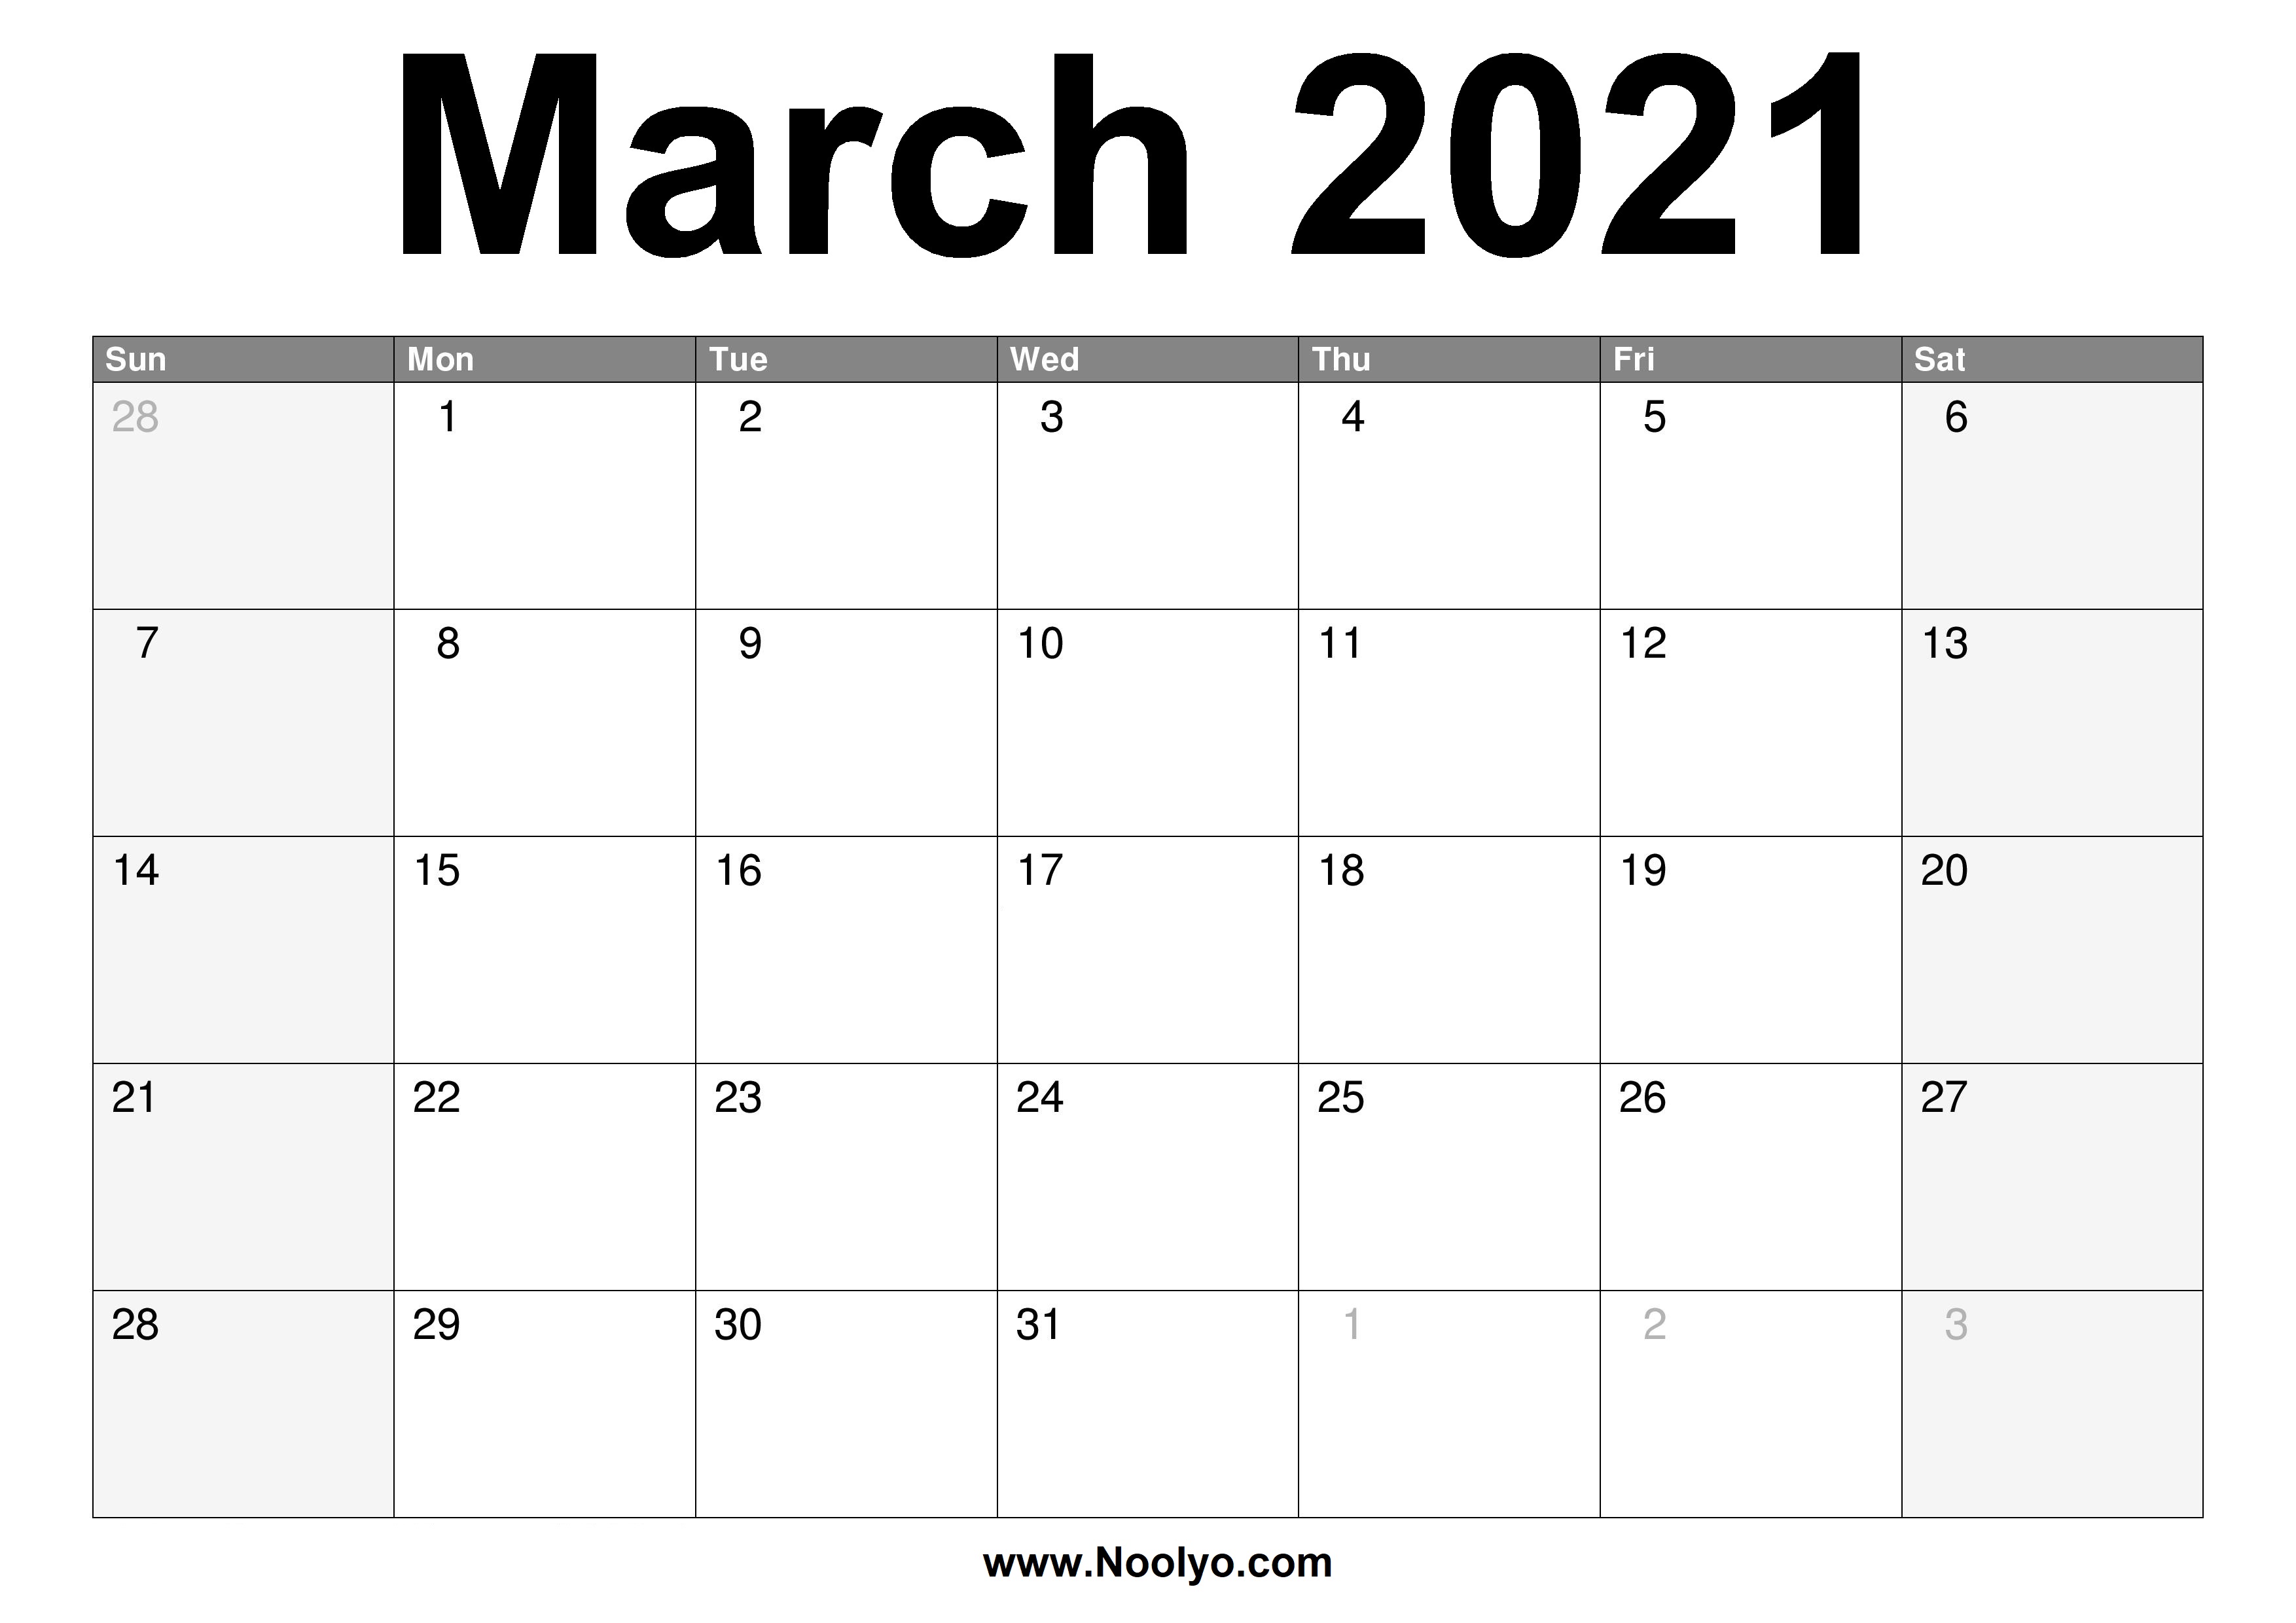 2021 calendar march 2021 March 2021 Calendar Printable Free Download Noolyo Com 2021 calendar march 2021